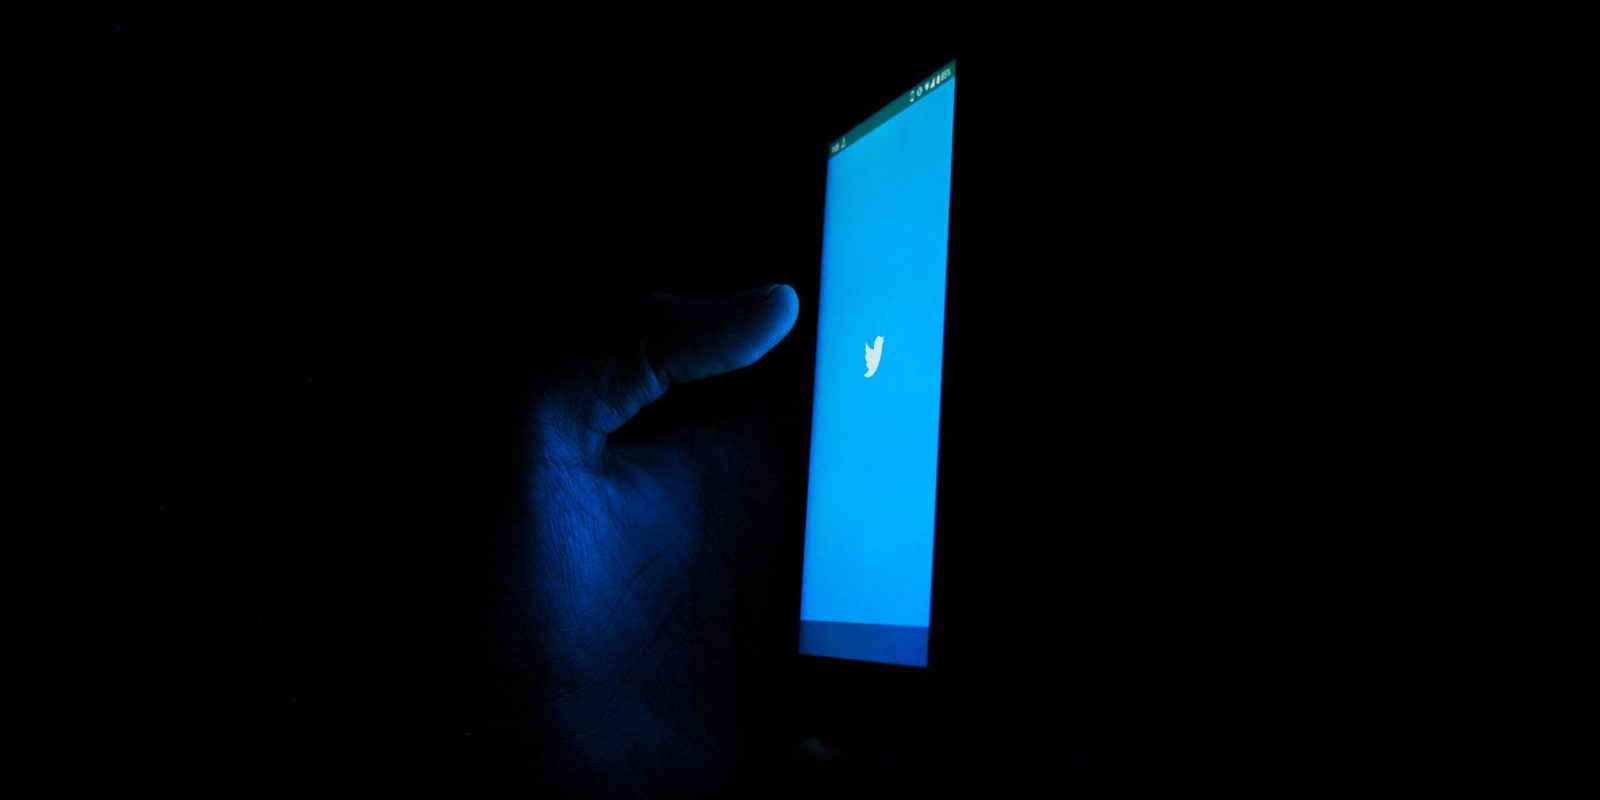 Twitter on smartphone in dark room | Reactions to Elon Musk buying Twitter